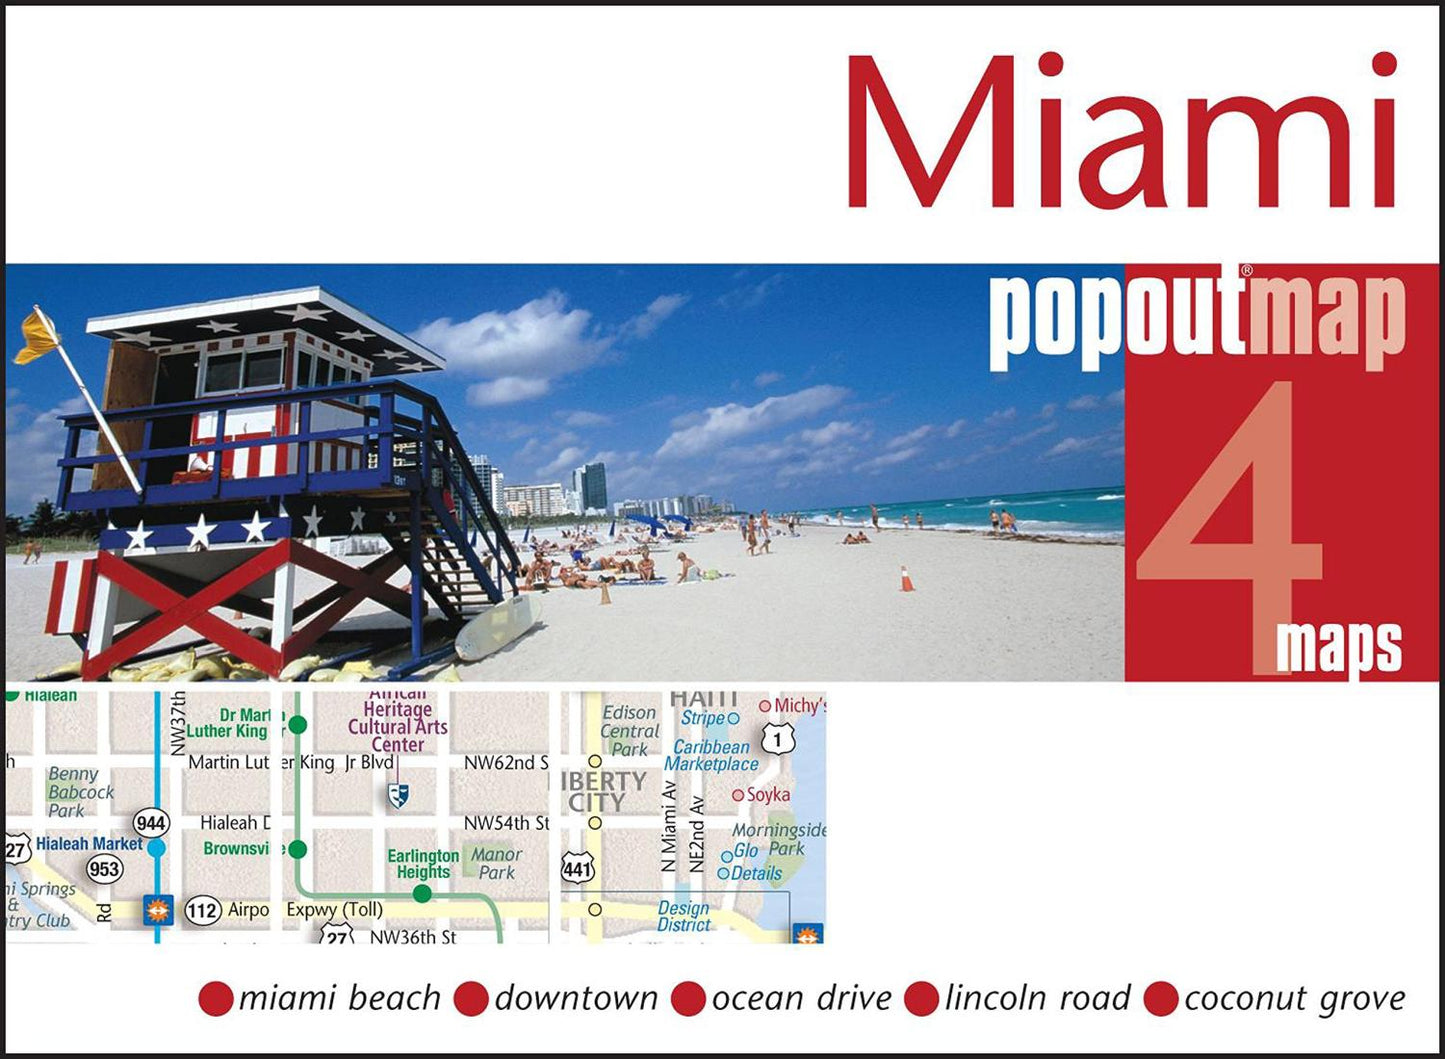 Miami : popoutmap : 4 maps